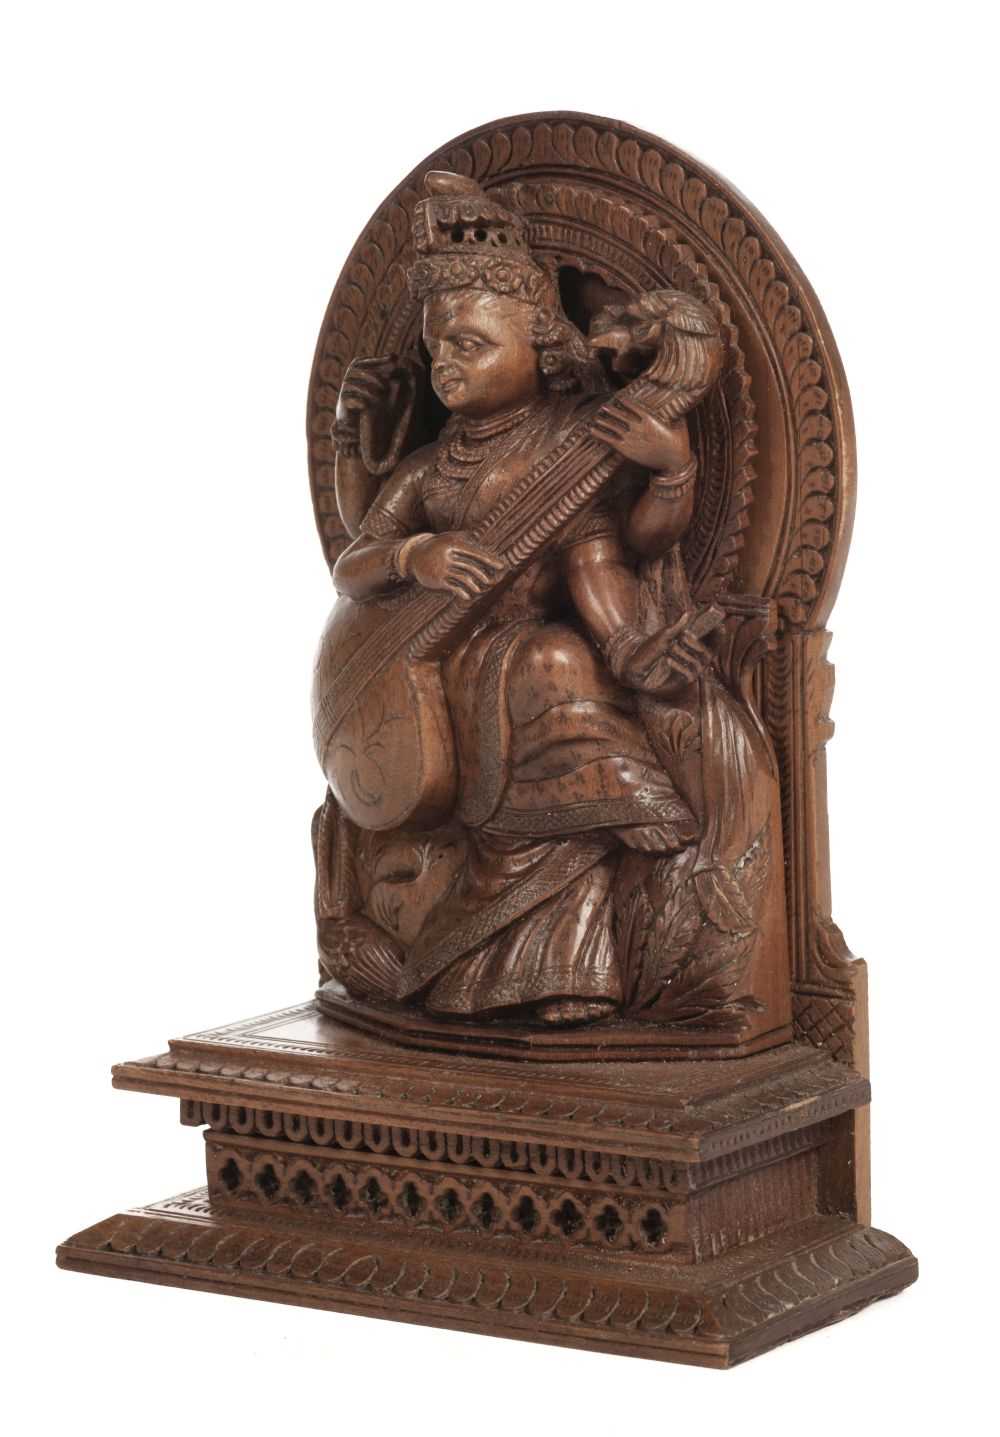 Lot 304 - Deity. An early 20th-century Indian sandalwood carving of a deity